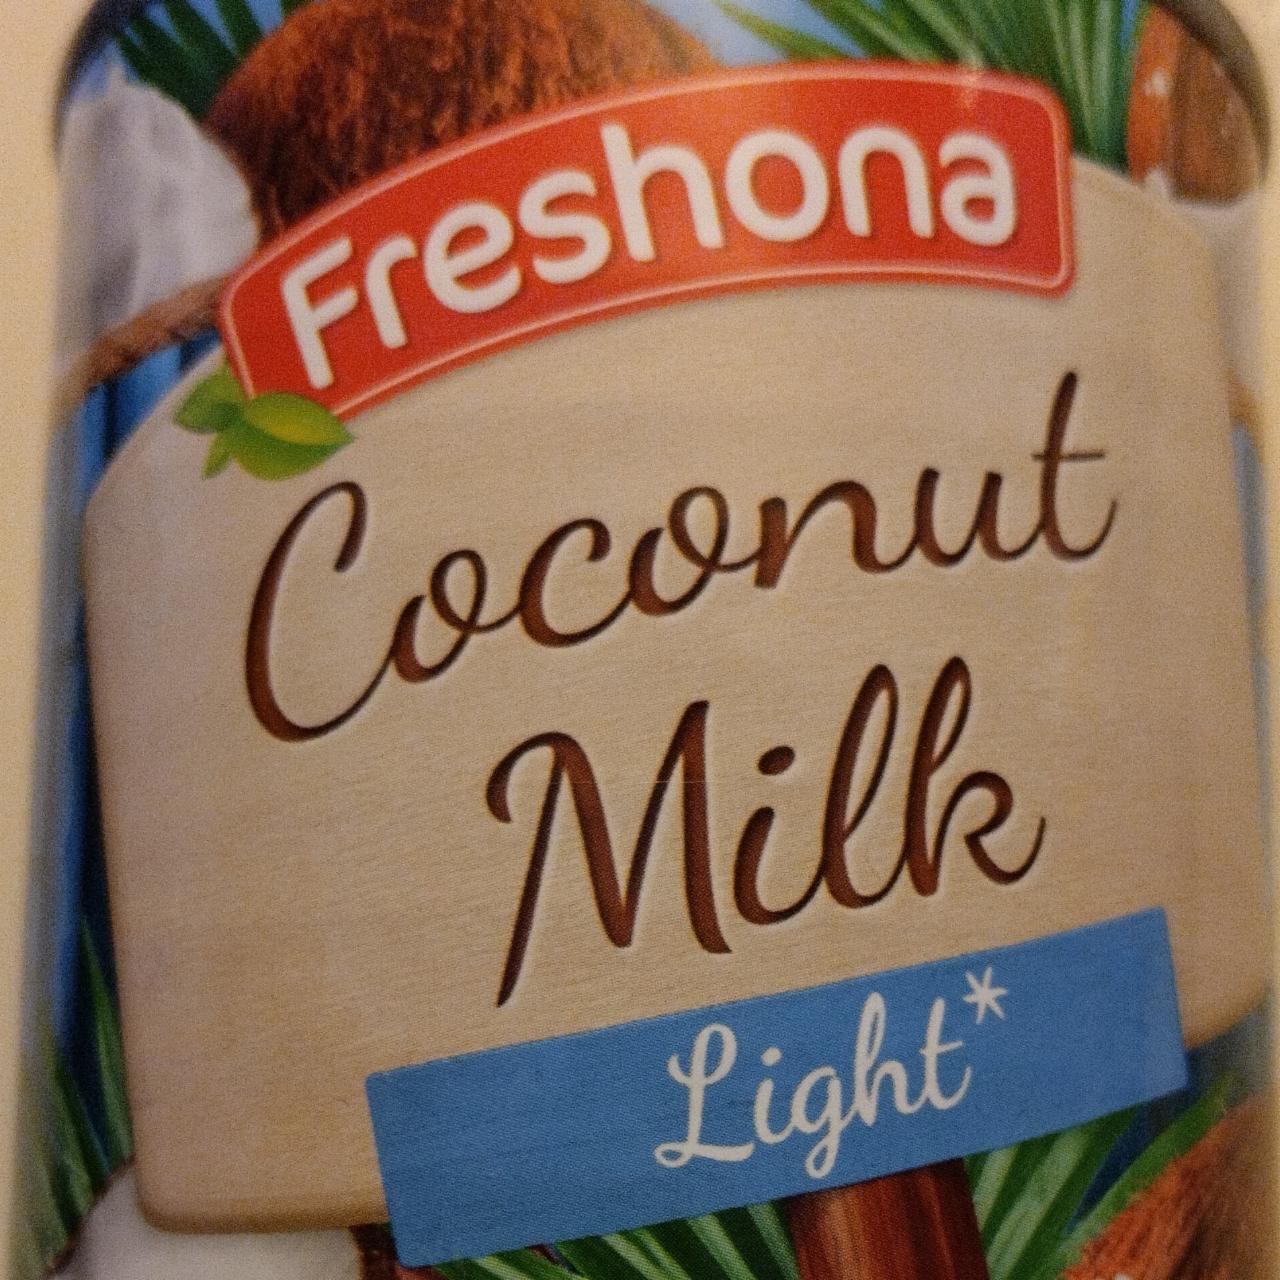 Fotografie - Coconut Milk Light Freshona